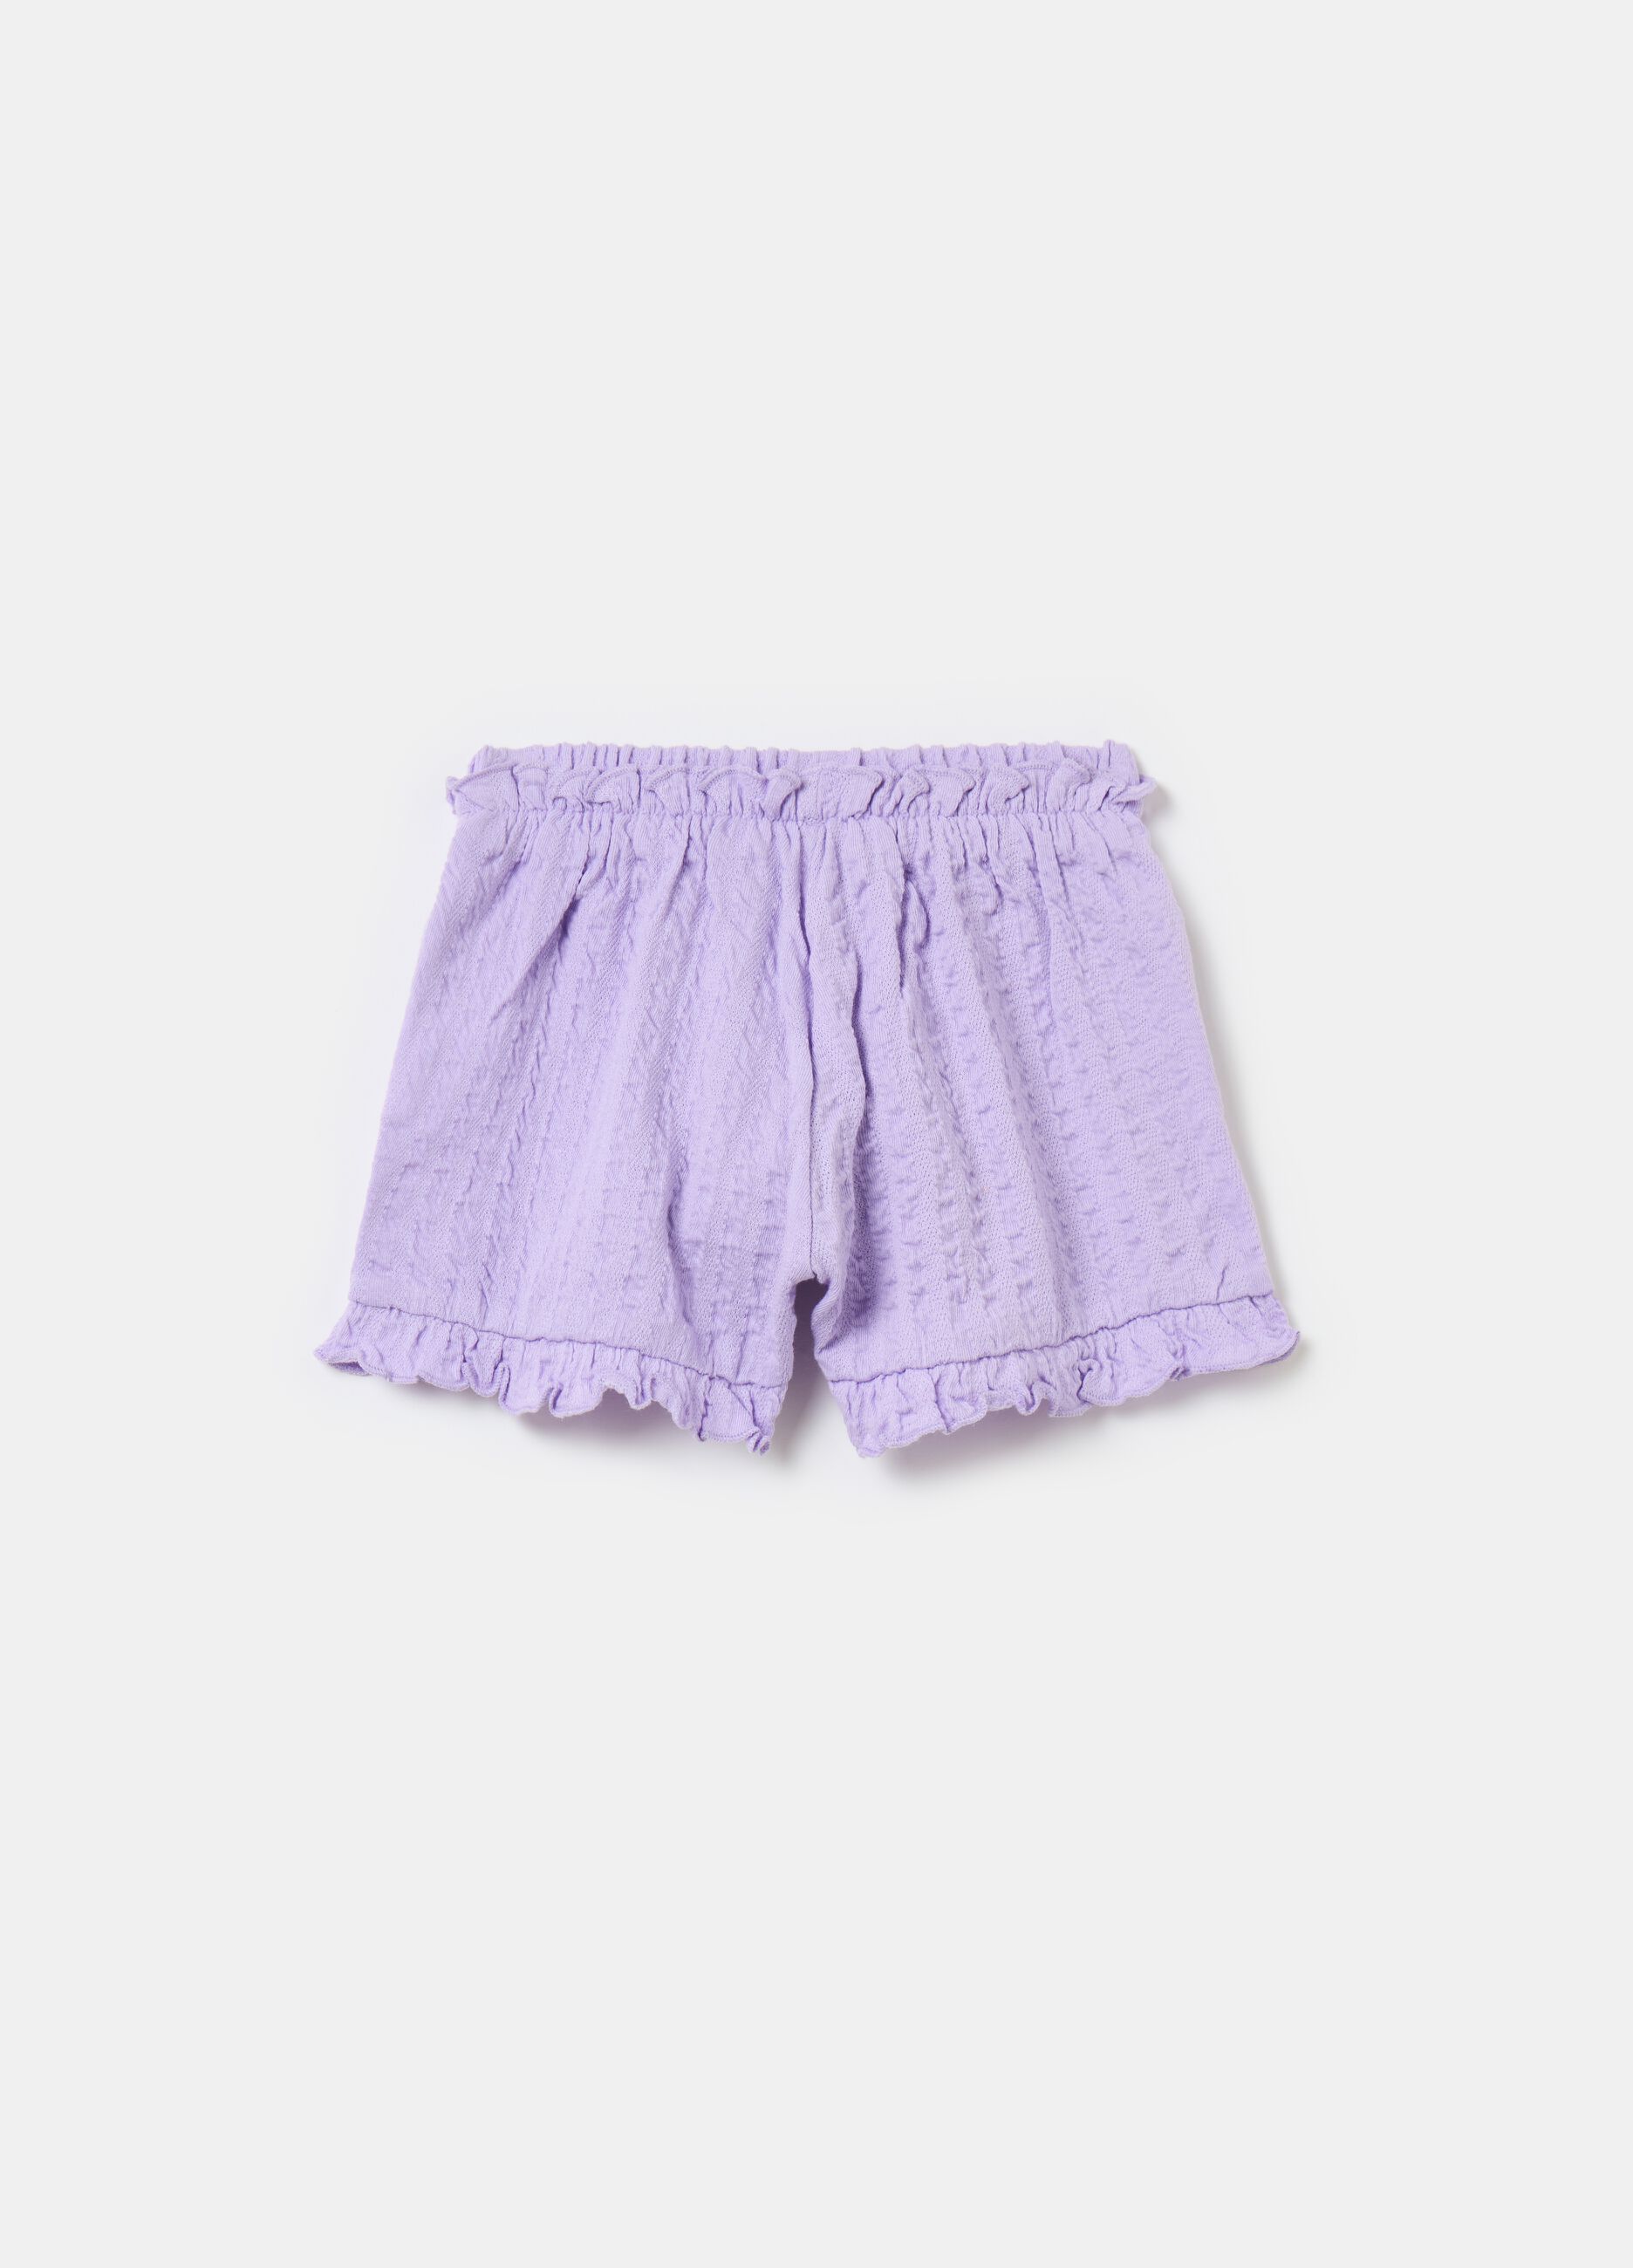 Jacquard shorts with frills